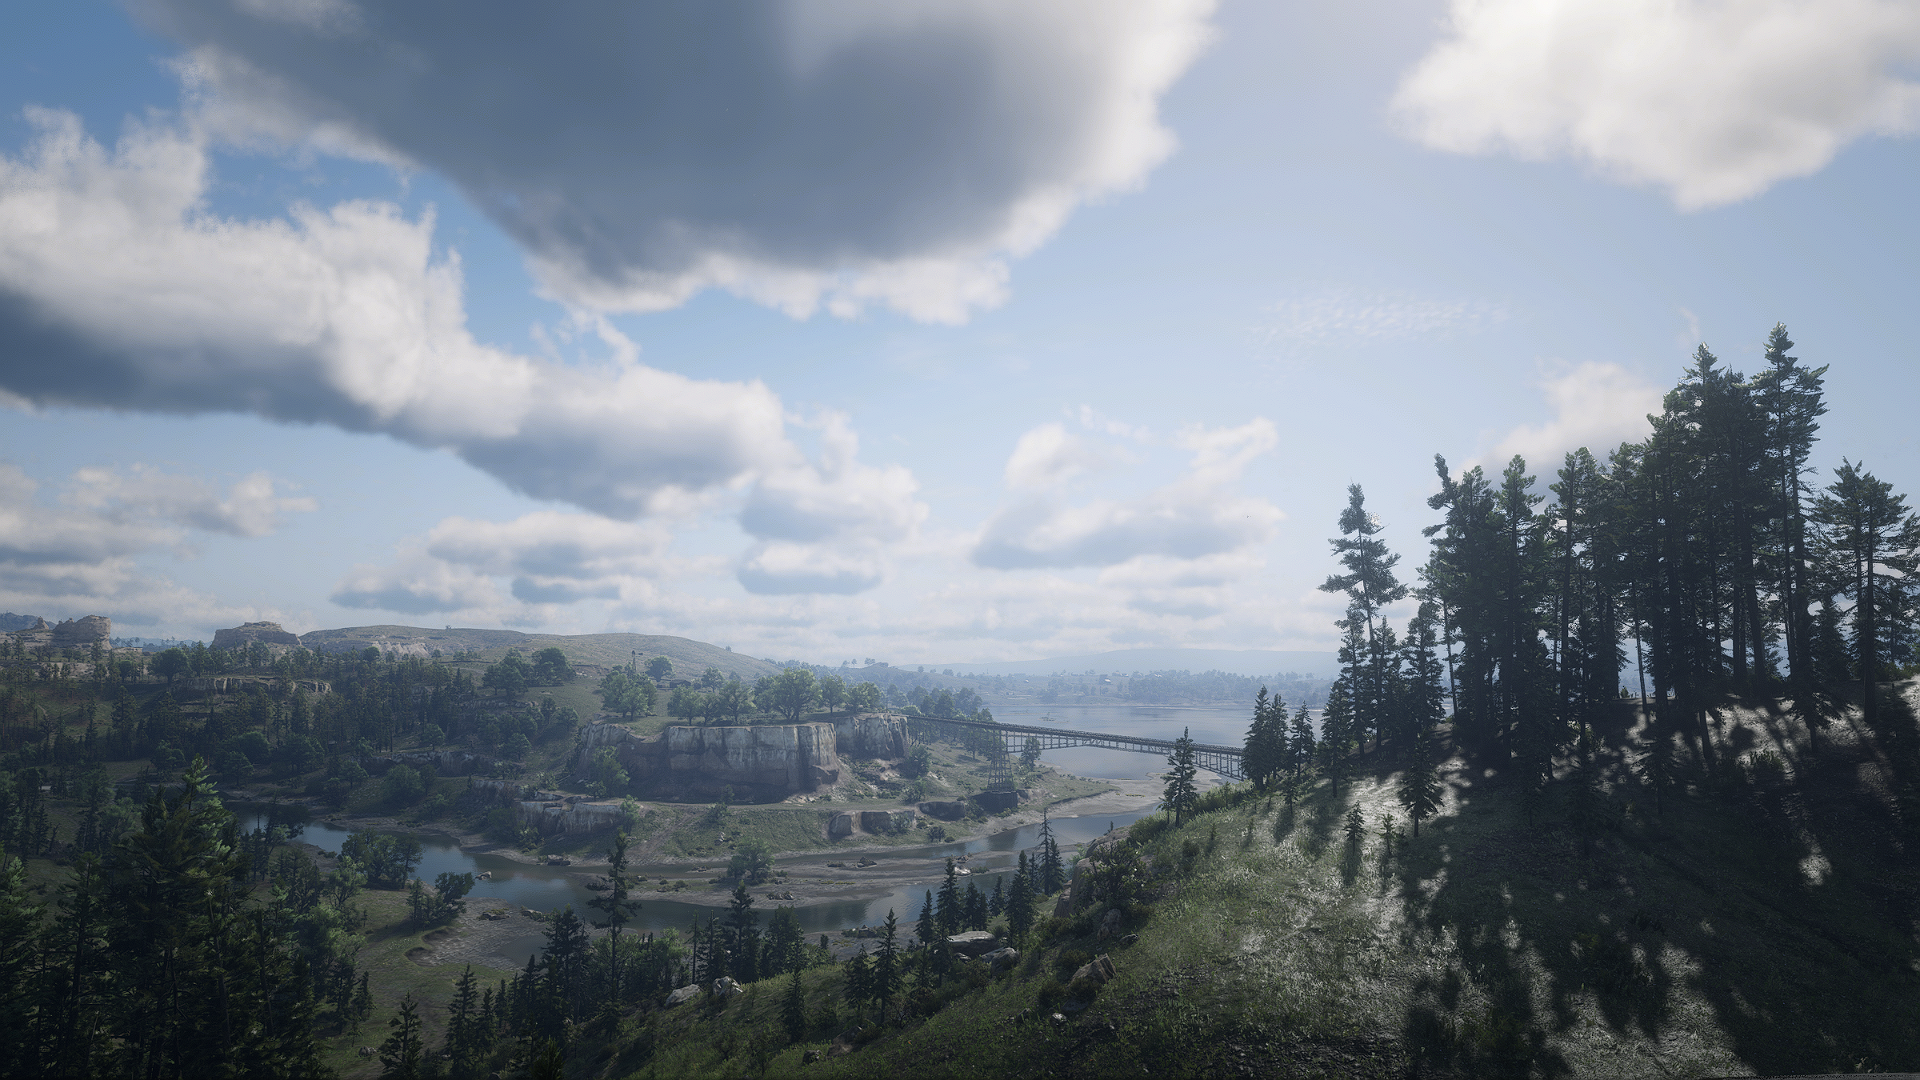 General 1920x1080 Red Dead Redemption 2 nature landscape screen shot trees clouds cliff bridge